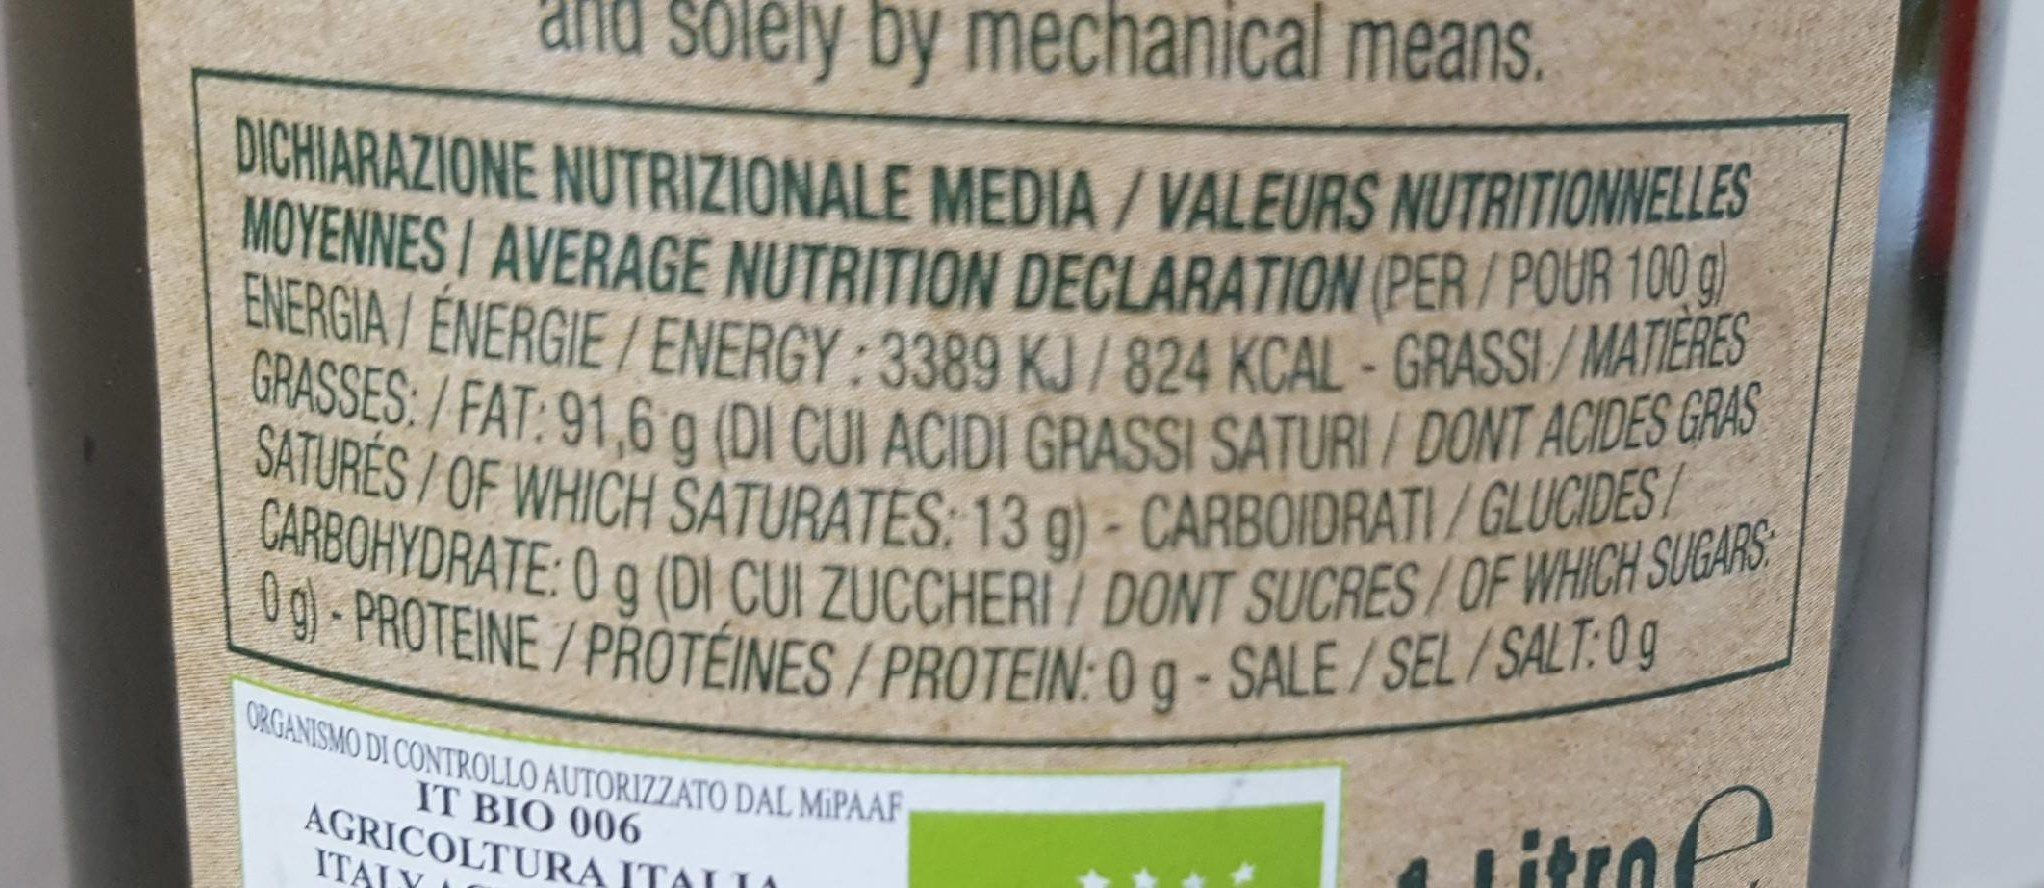 Olio extra vergine di oliva bio - Valori nutrizionali - fr